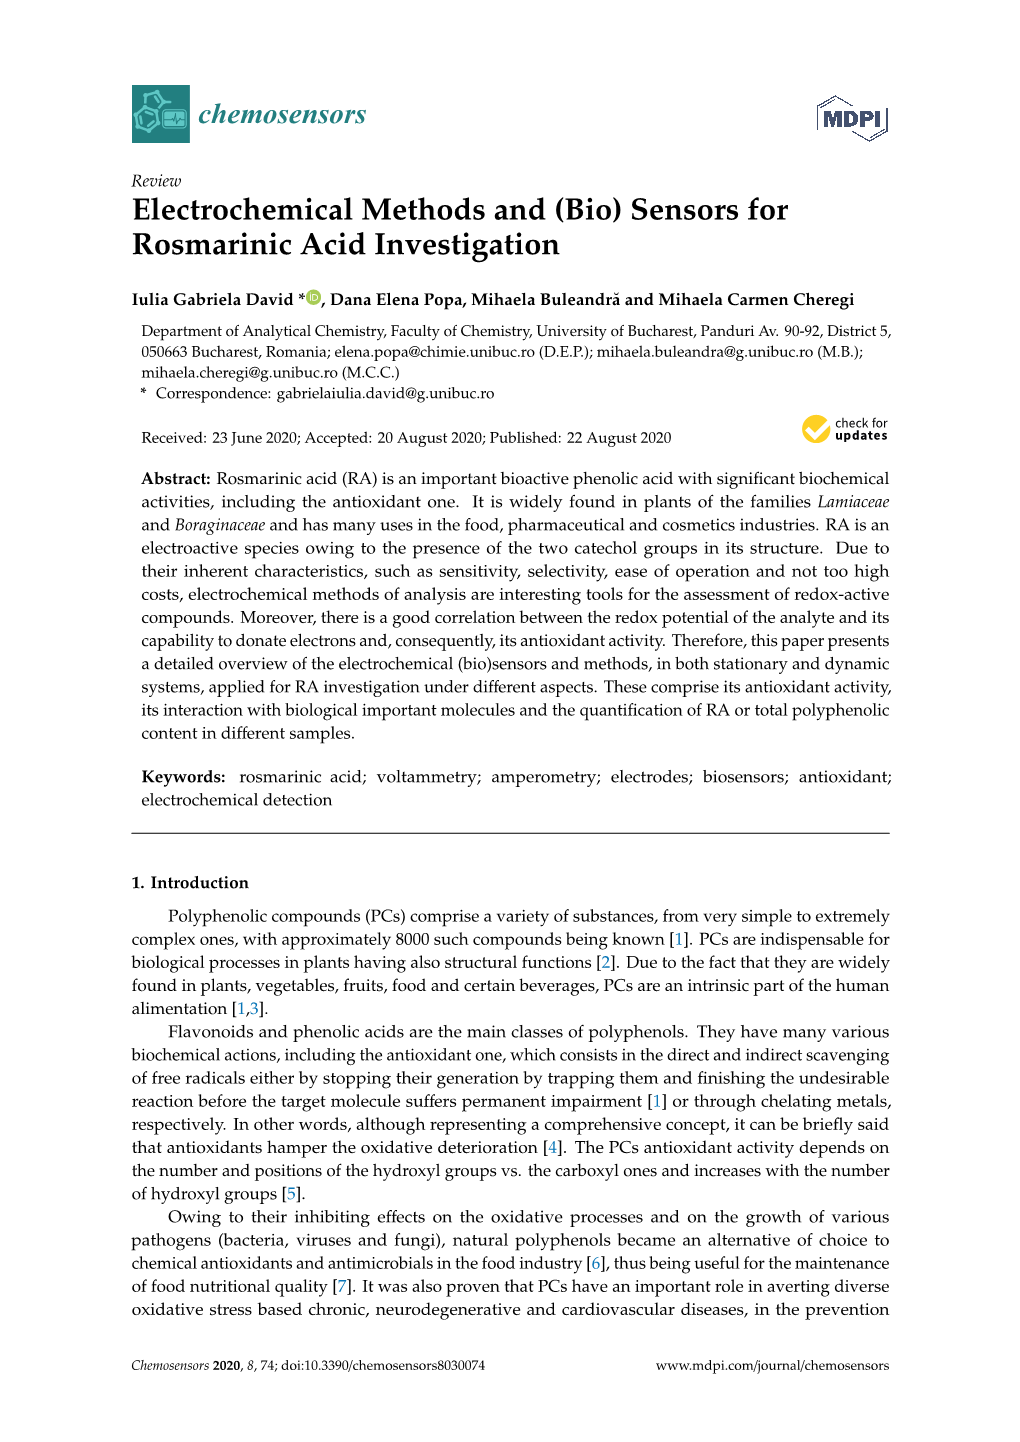 Electrochemical Methods and (Bio) Sensors for Rosmarinic Acid Investigation